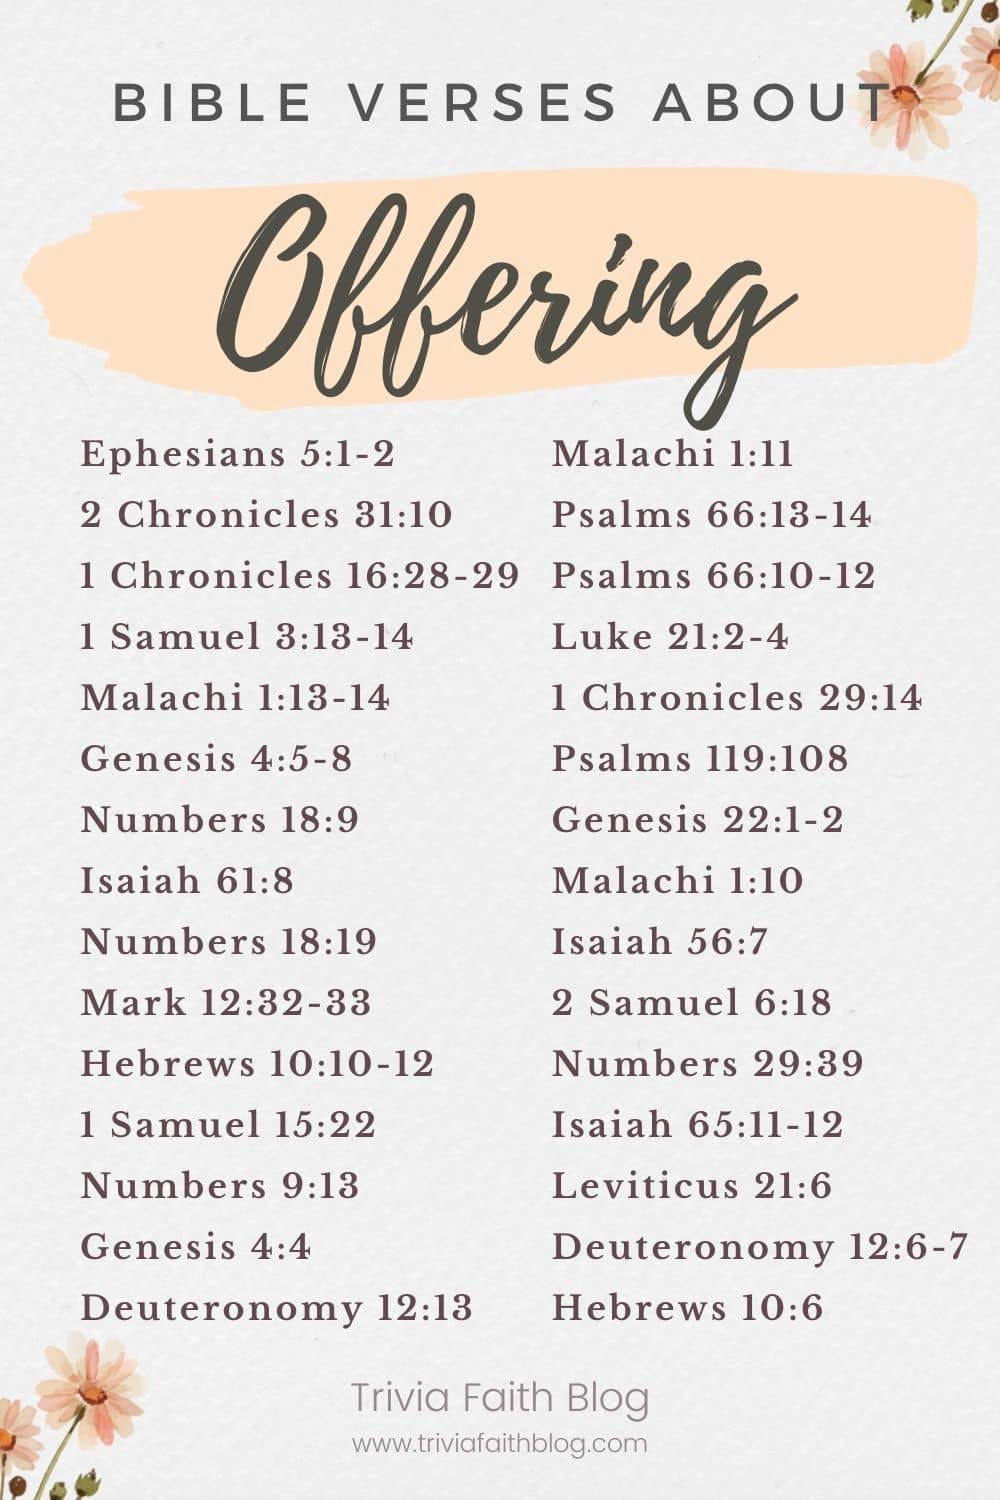 Bible verses about offering kjv